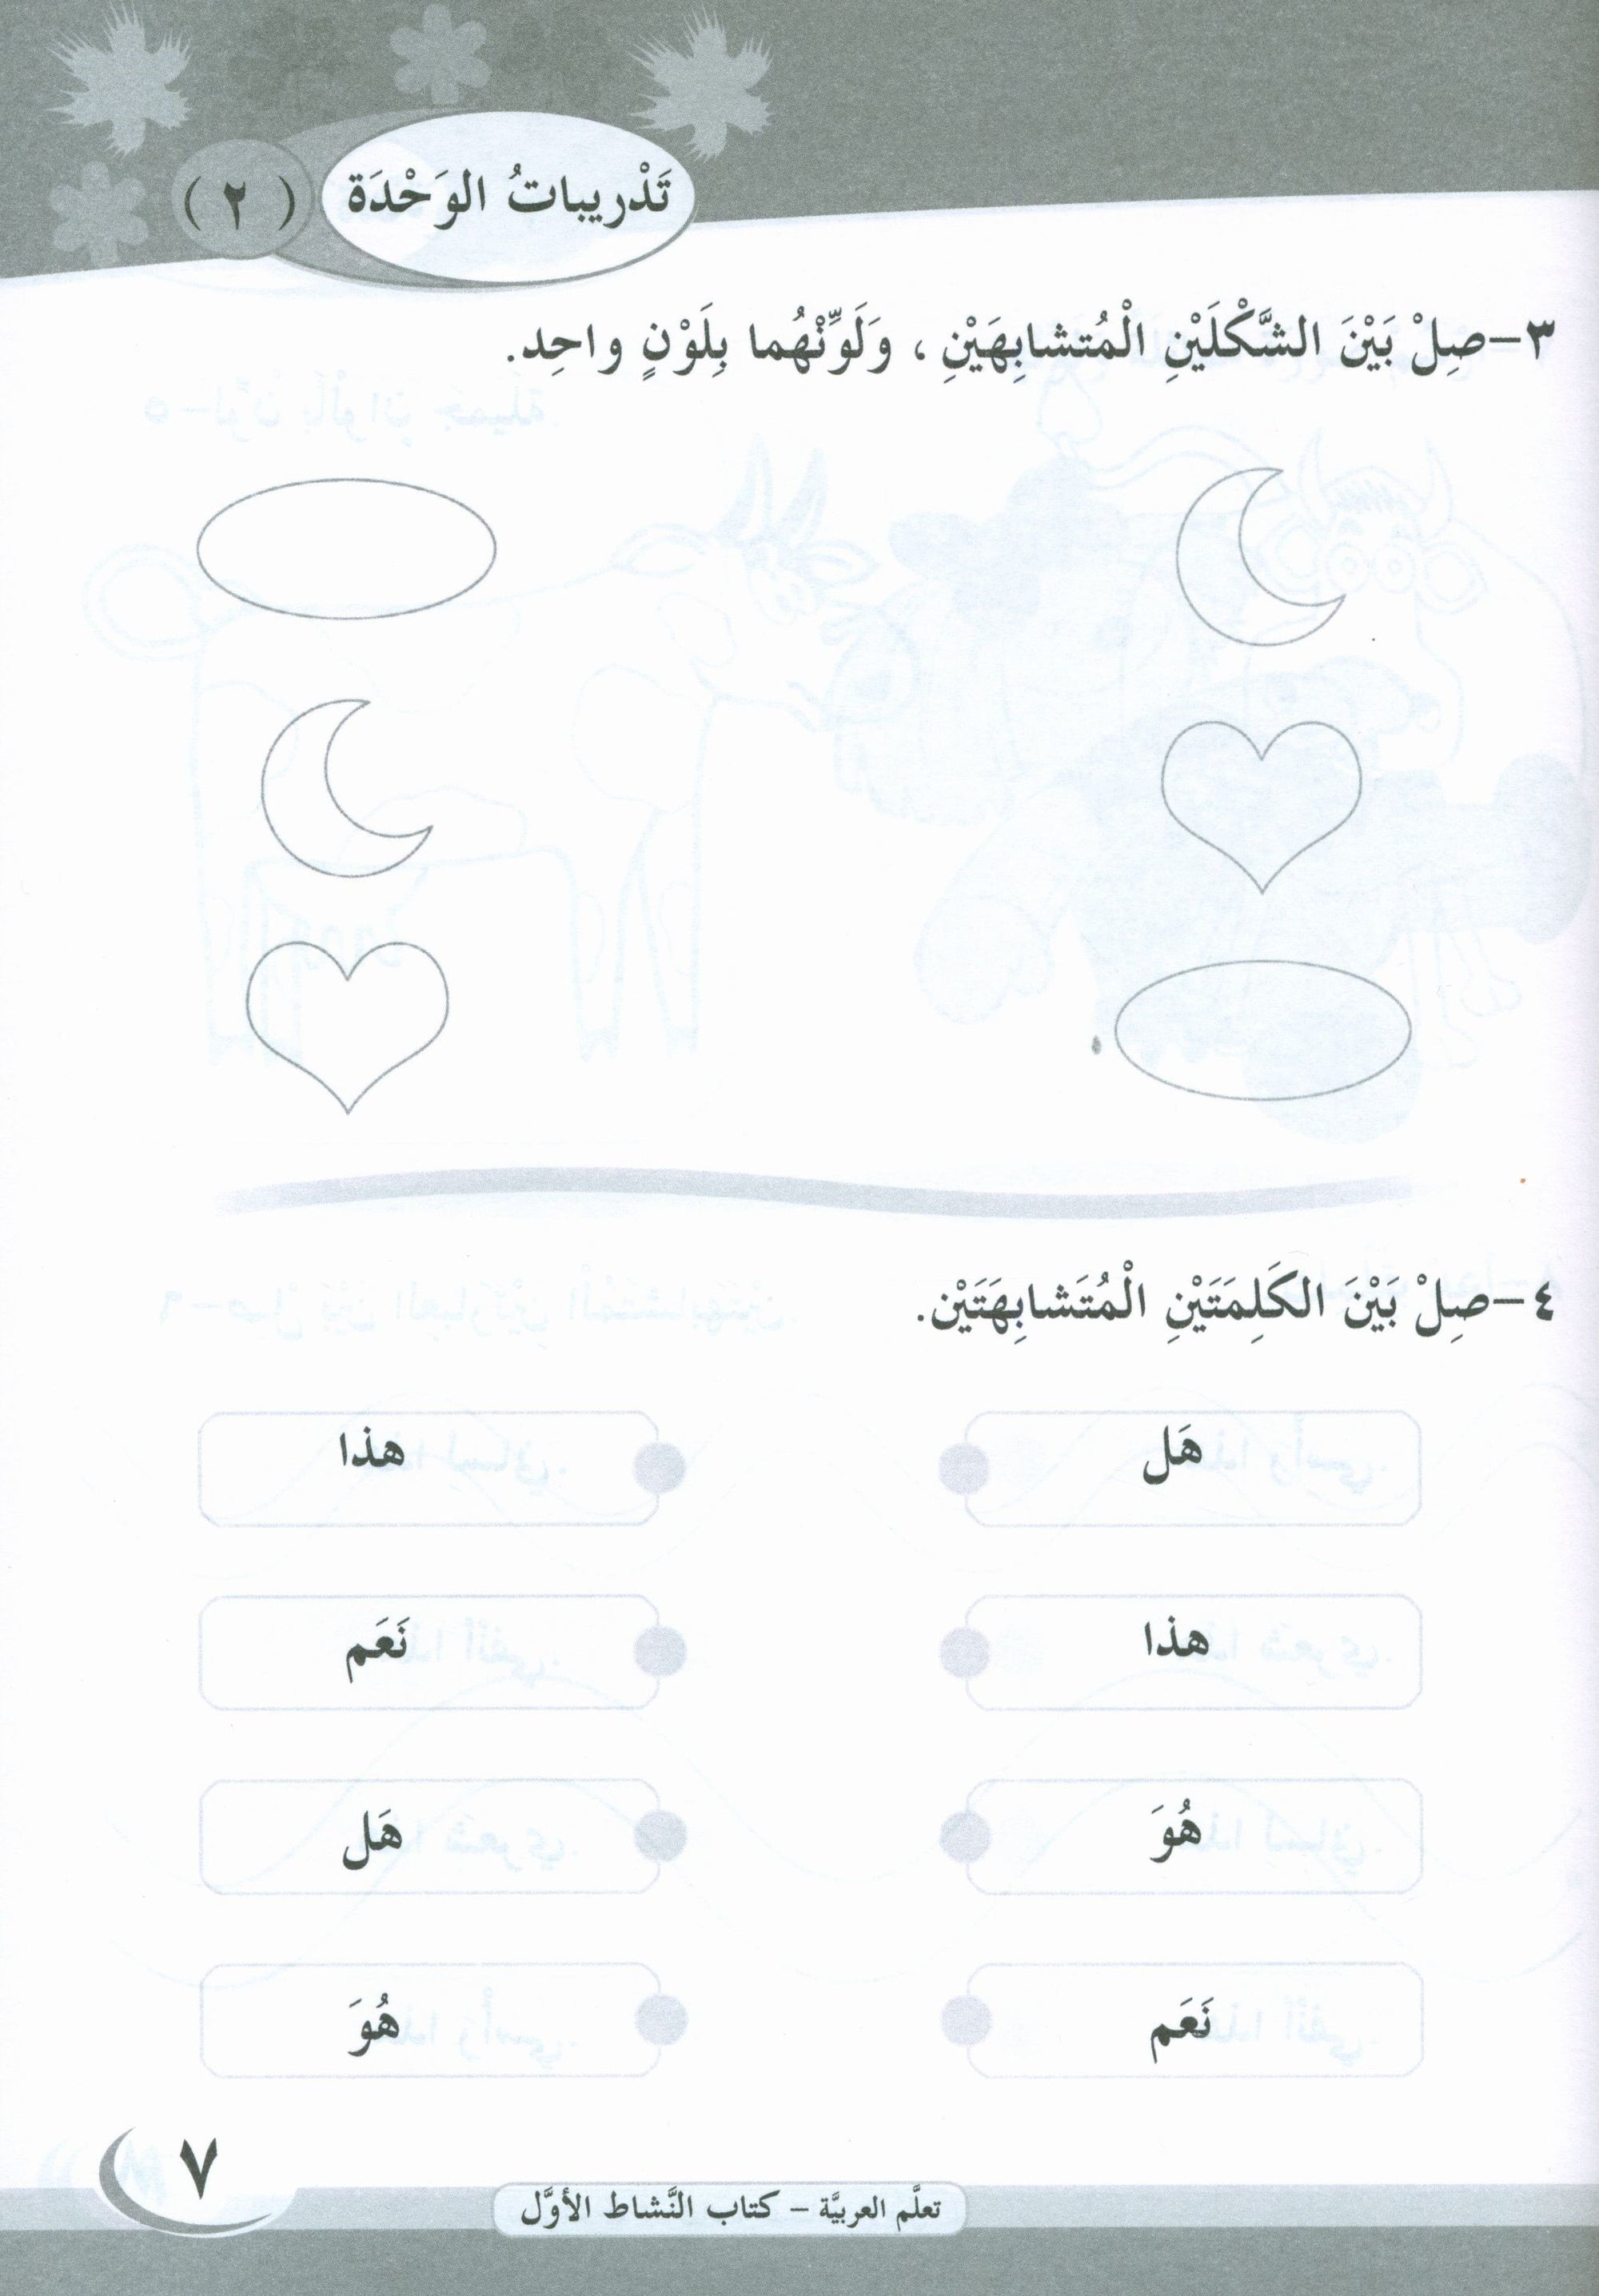 ICO Learn Arabic Workbook Level 1 Part 1 تعلم العربية كتاب التدريبات